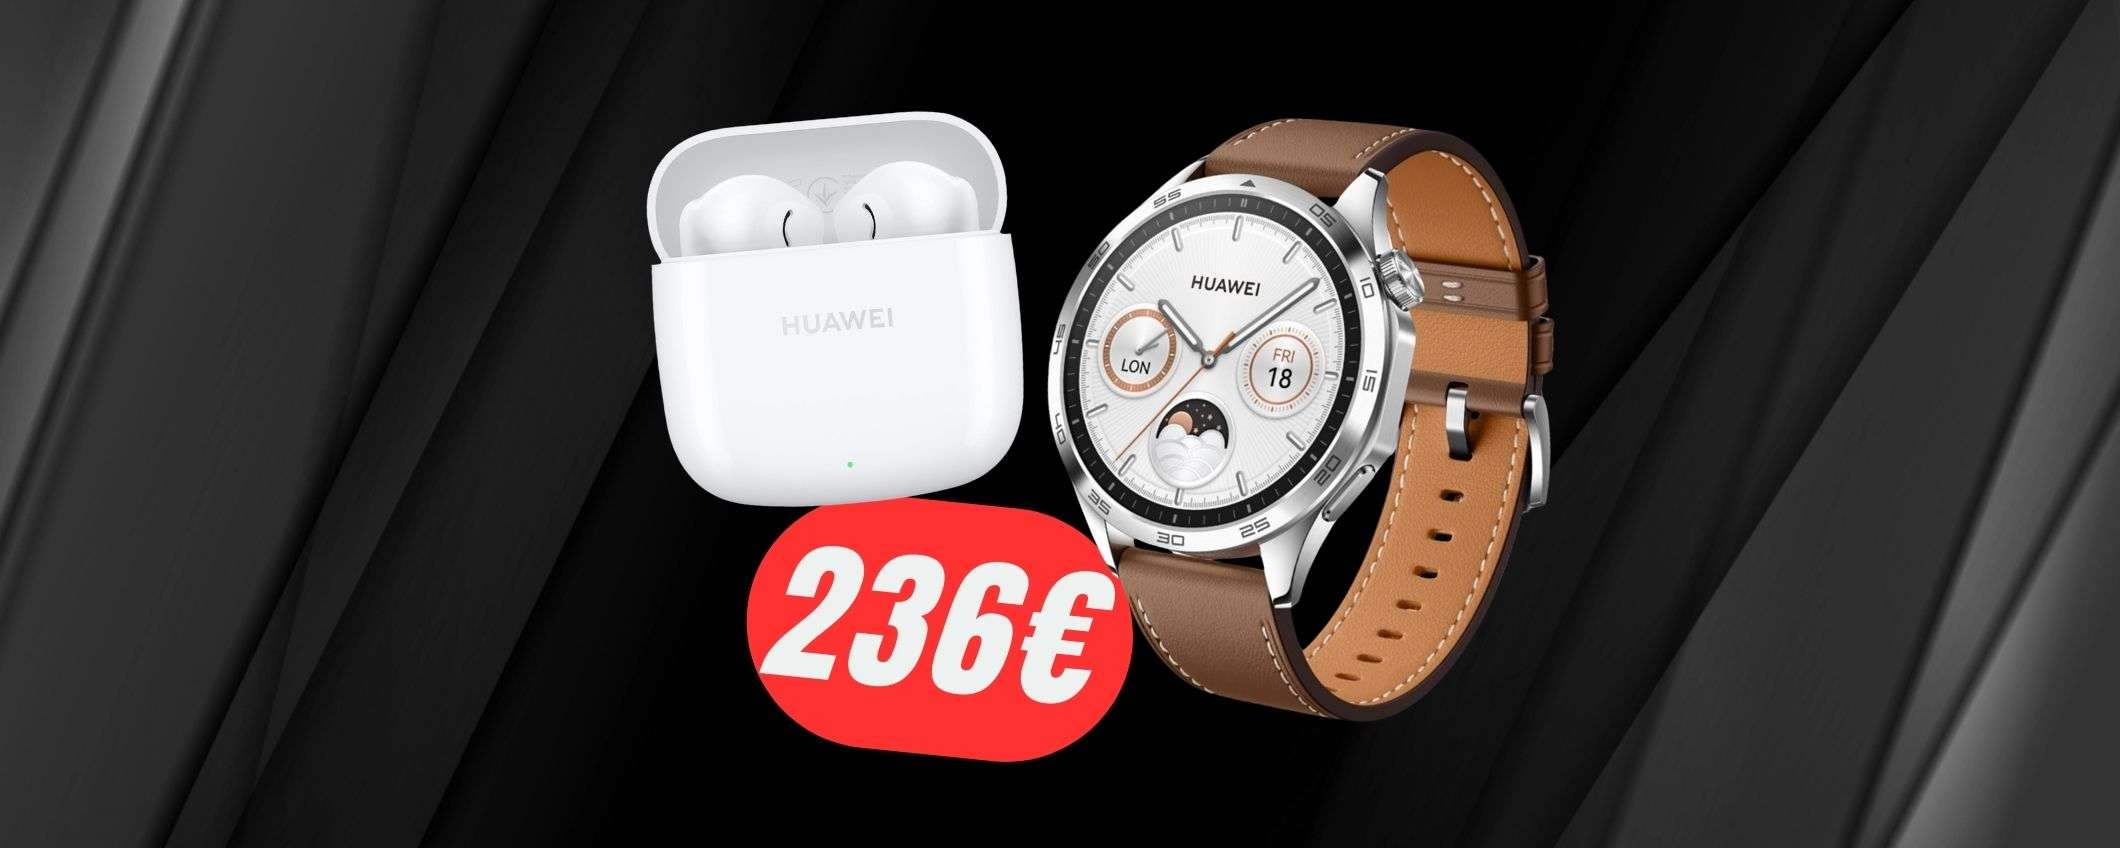 COMBO HUAWEI: smartwatch+auricolari wireless a soli 236€!